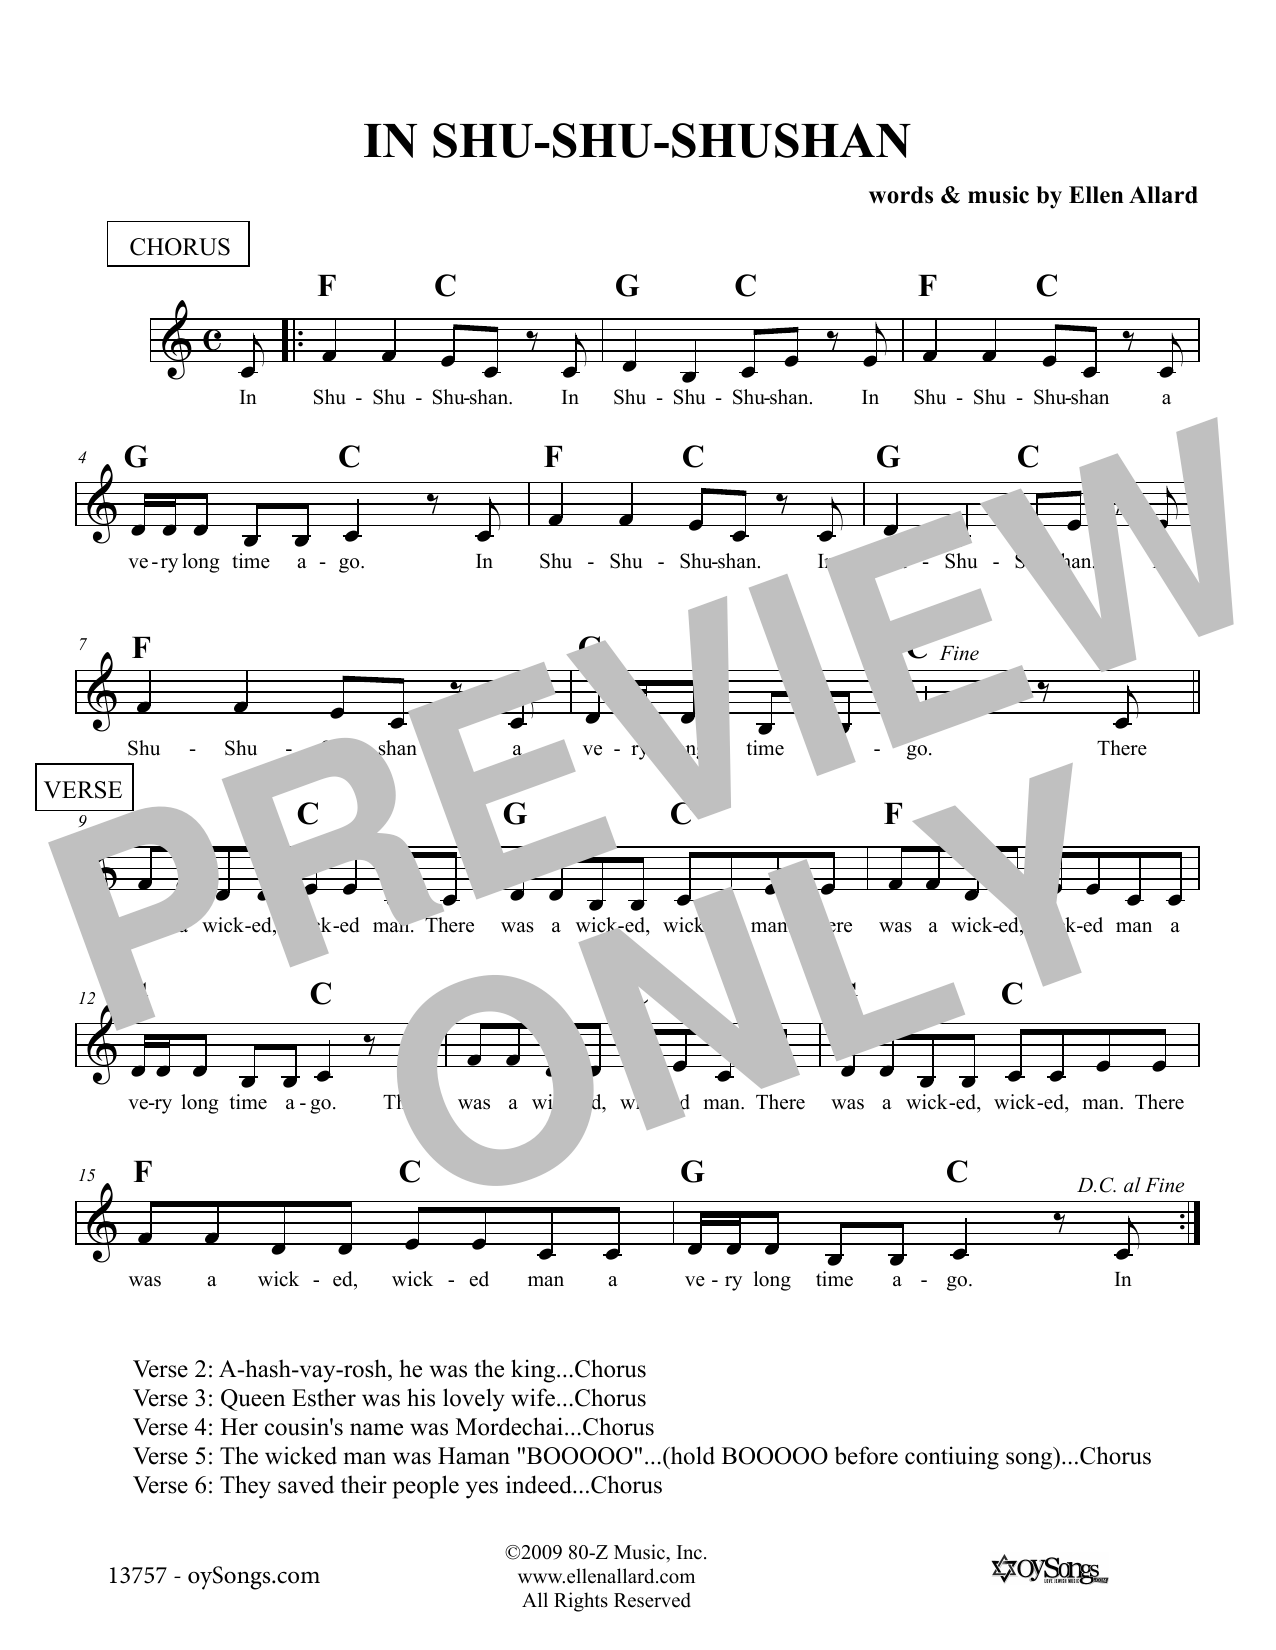 Ellen Allard In Shu Shu Shushan Sheet Music Notes & Chords for Melody Line, Lyrics & Chords - Download or Print PDF